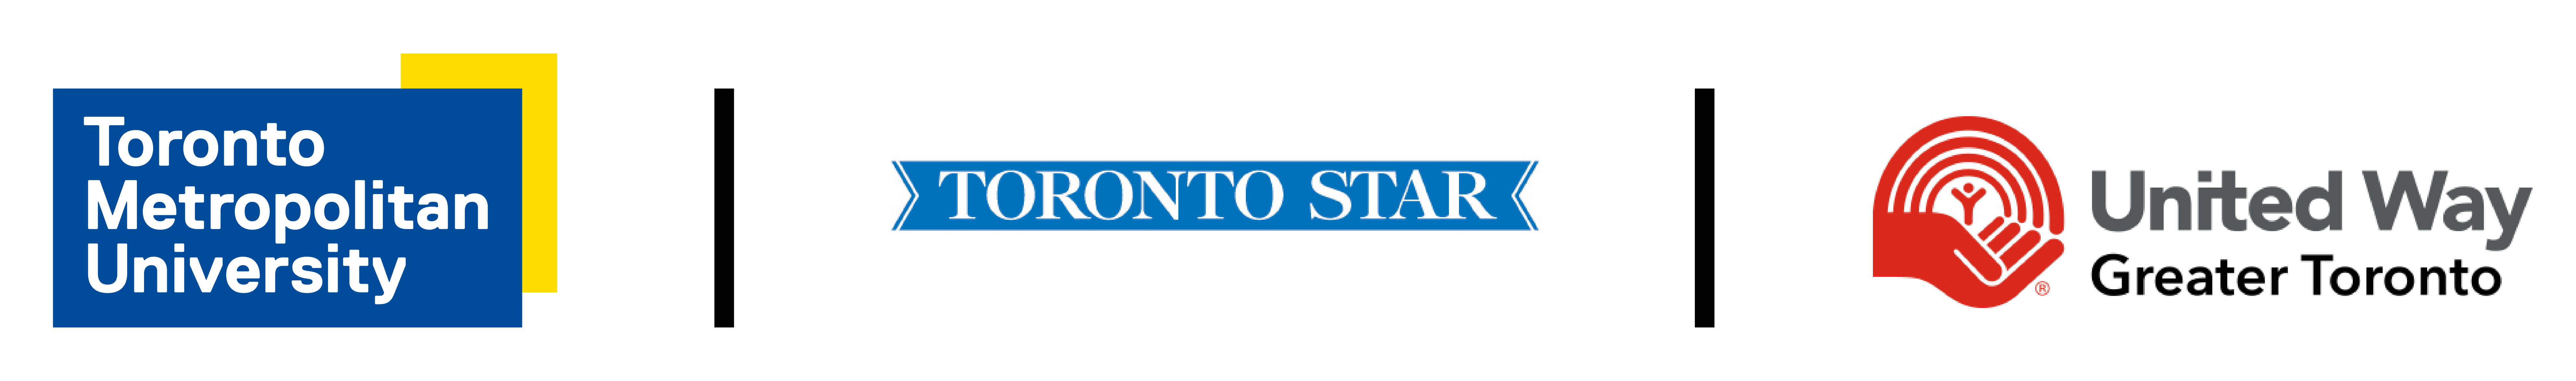 TMU, Toronto Star and United Way Greater Toronto logos